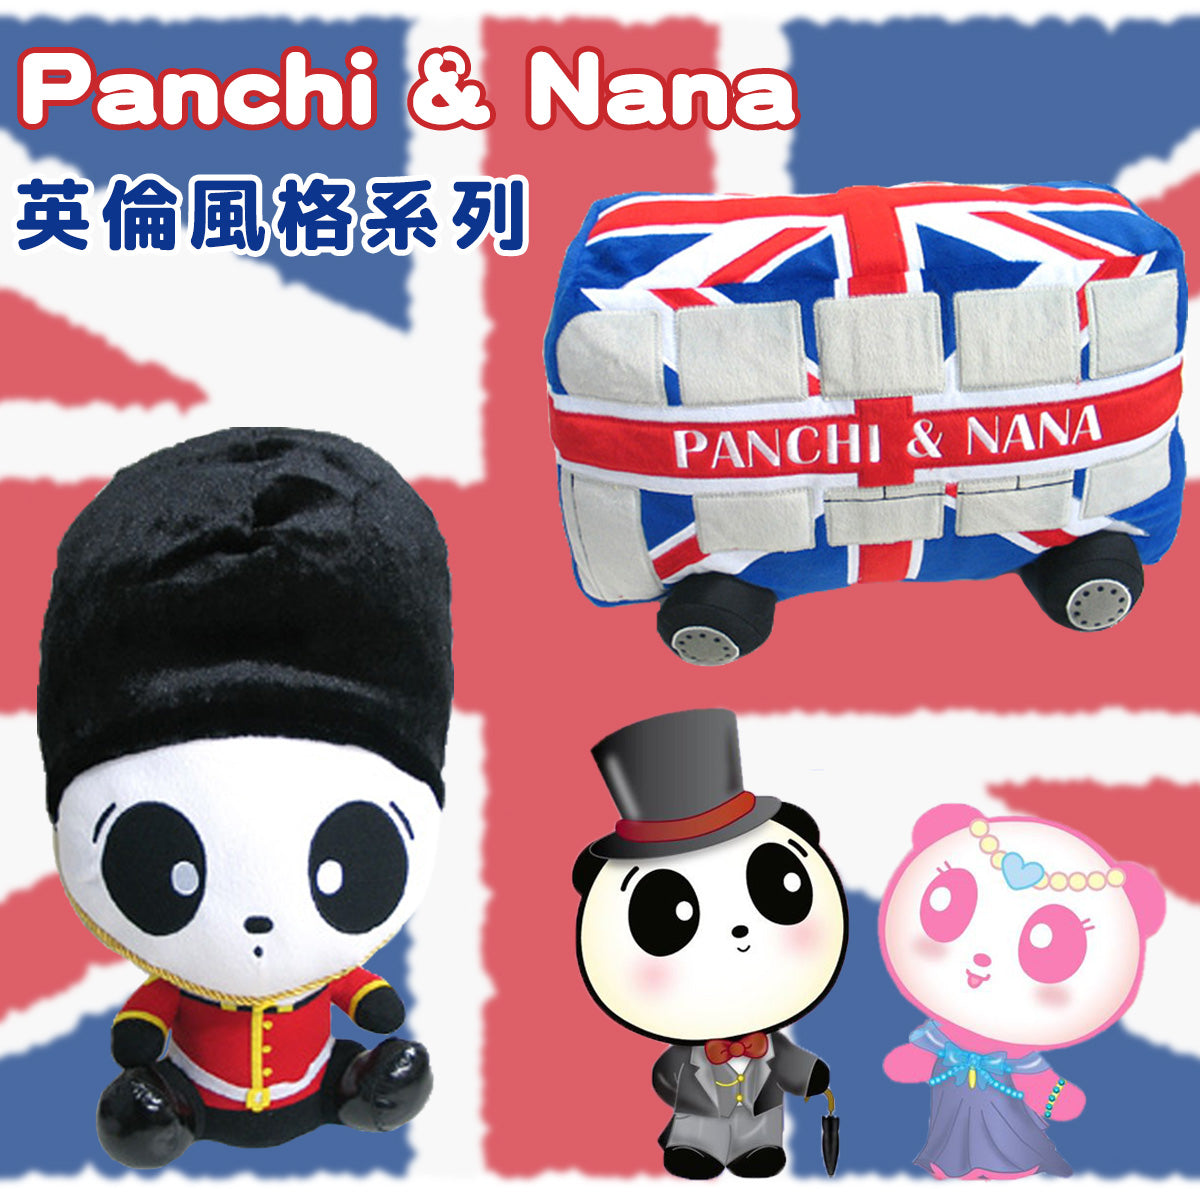 Plush - Panchi London Bus